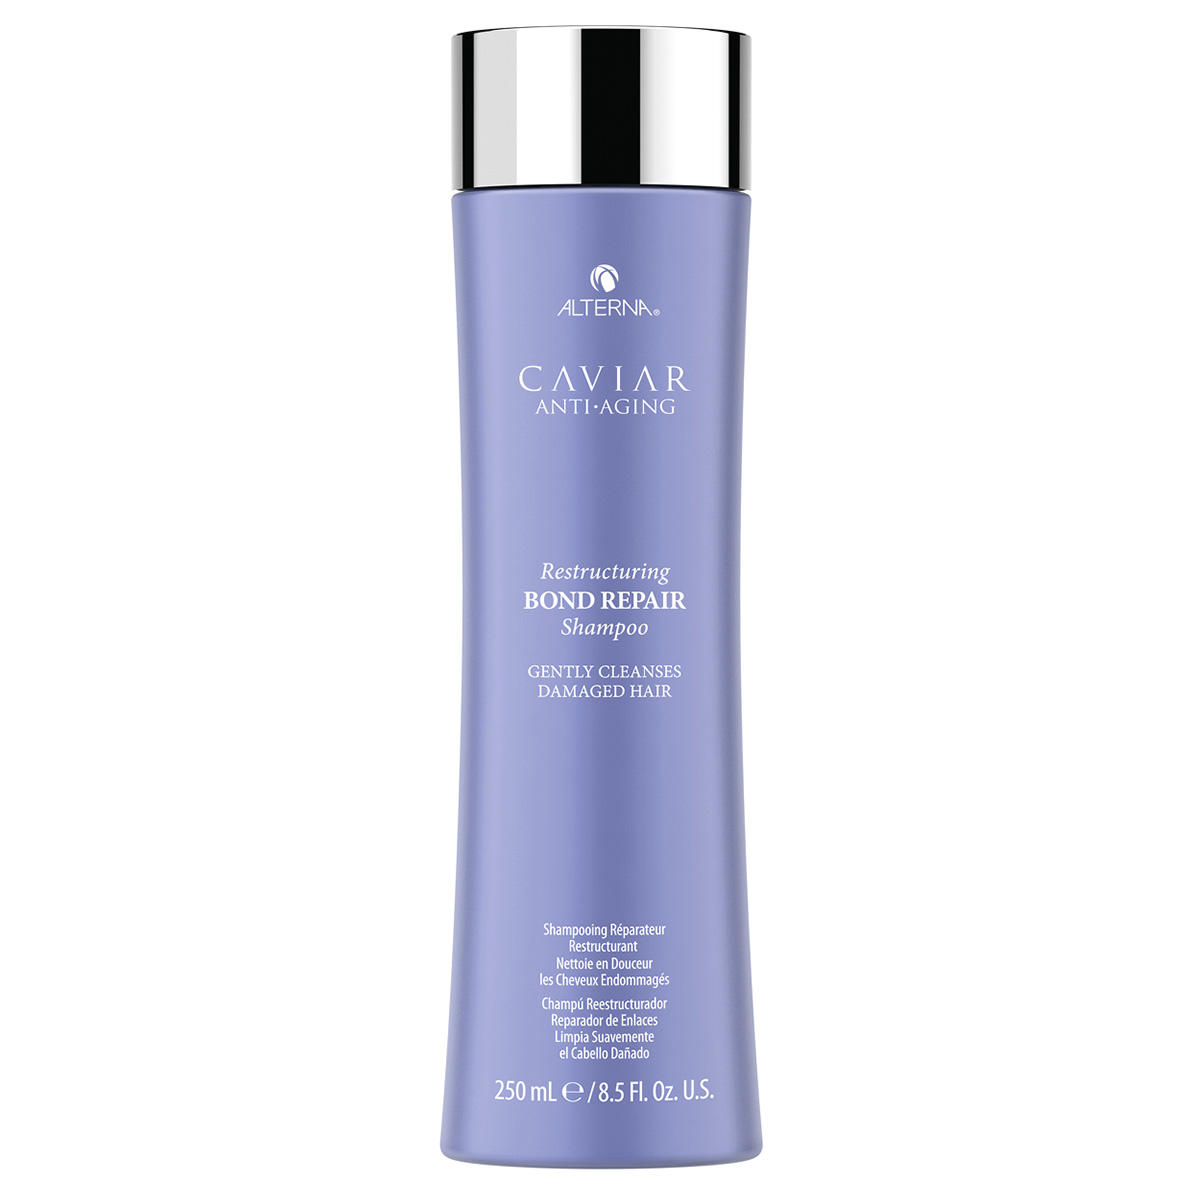 Alterna Caviar Anti-Aging Restructuring Bond Repair Shampoo 250 ml - 1